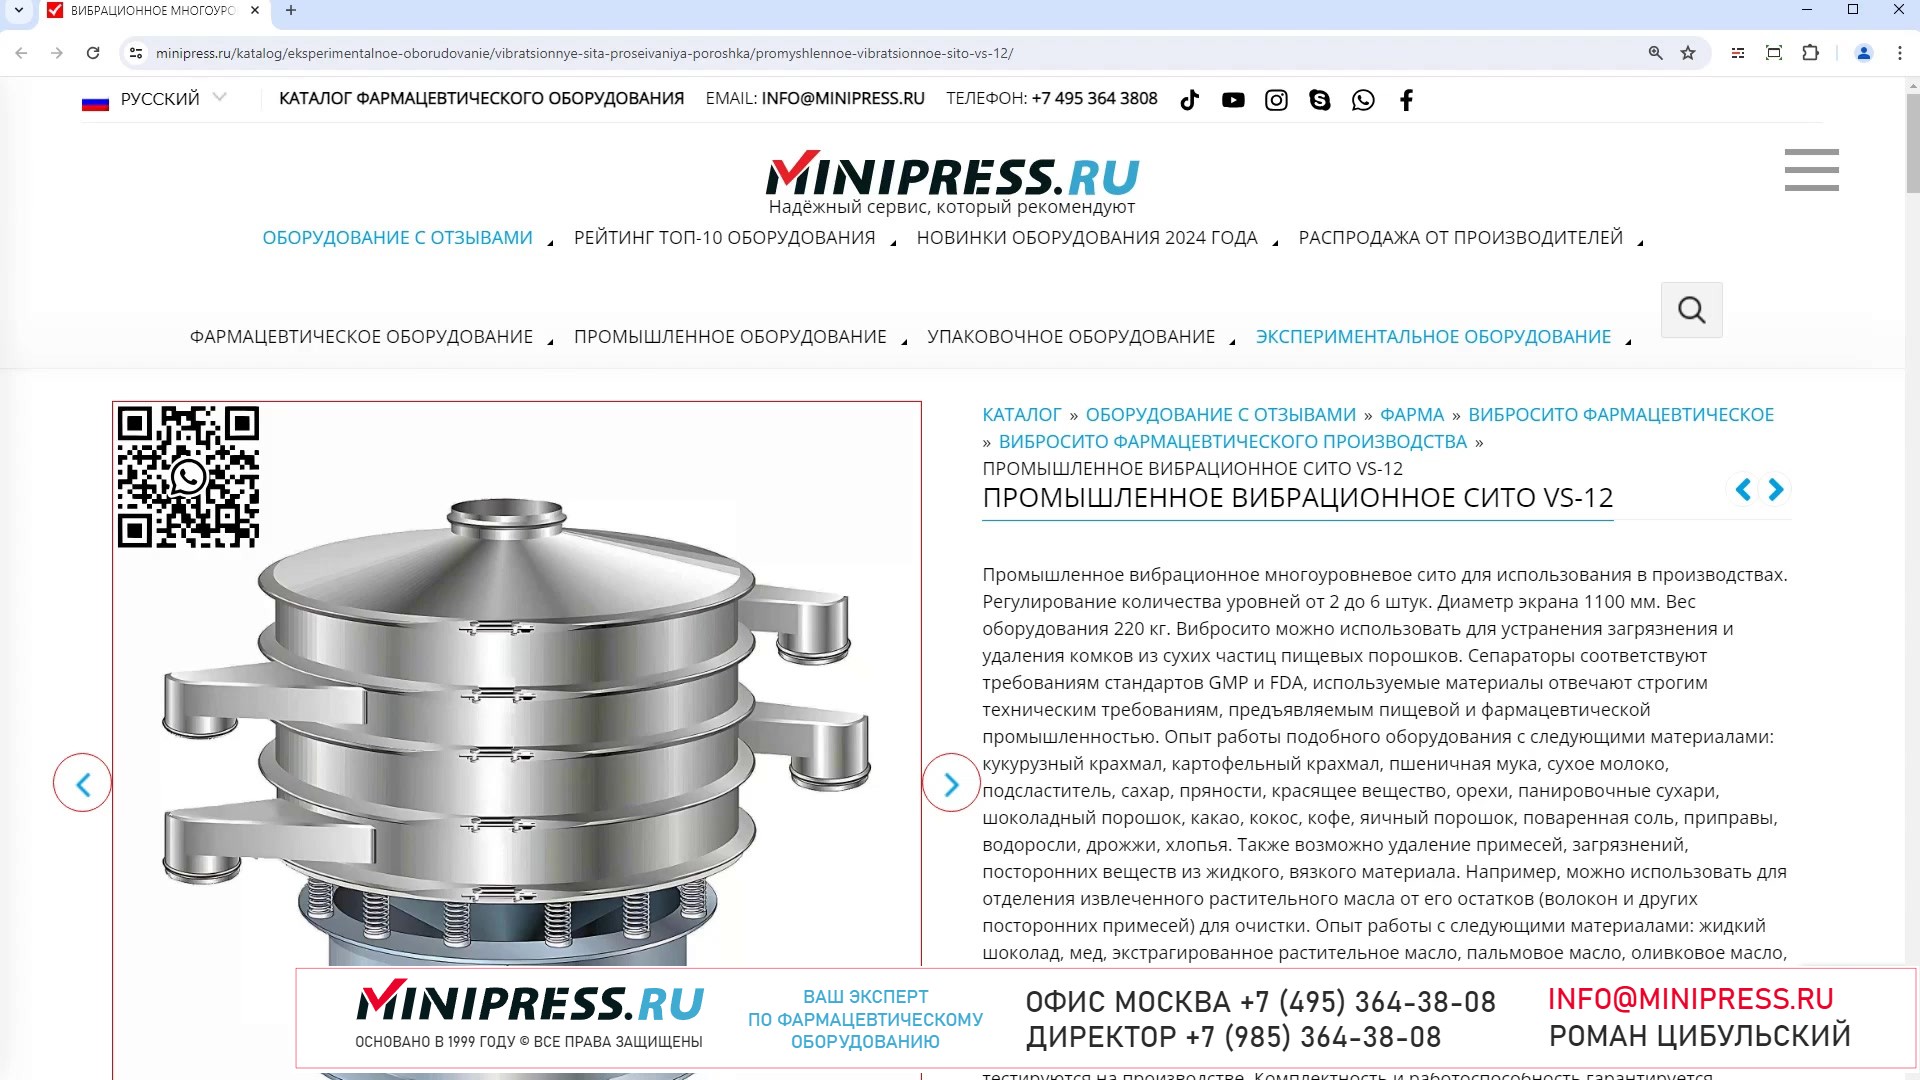 Minipress.ru Промышленное вибрационное сито VS-12